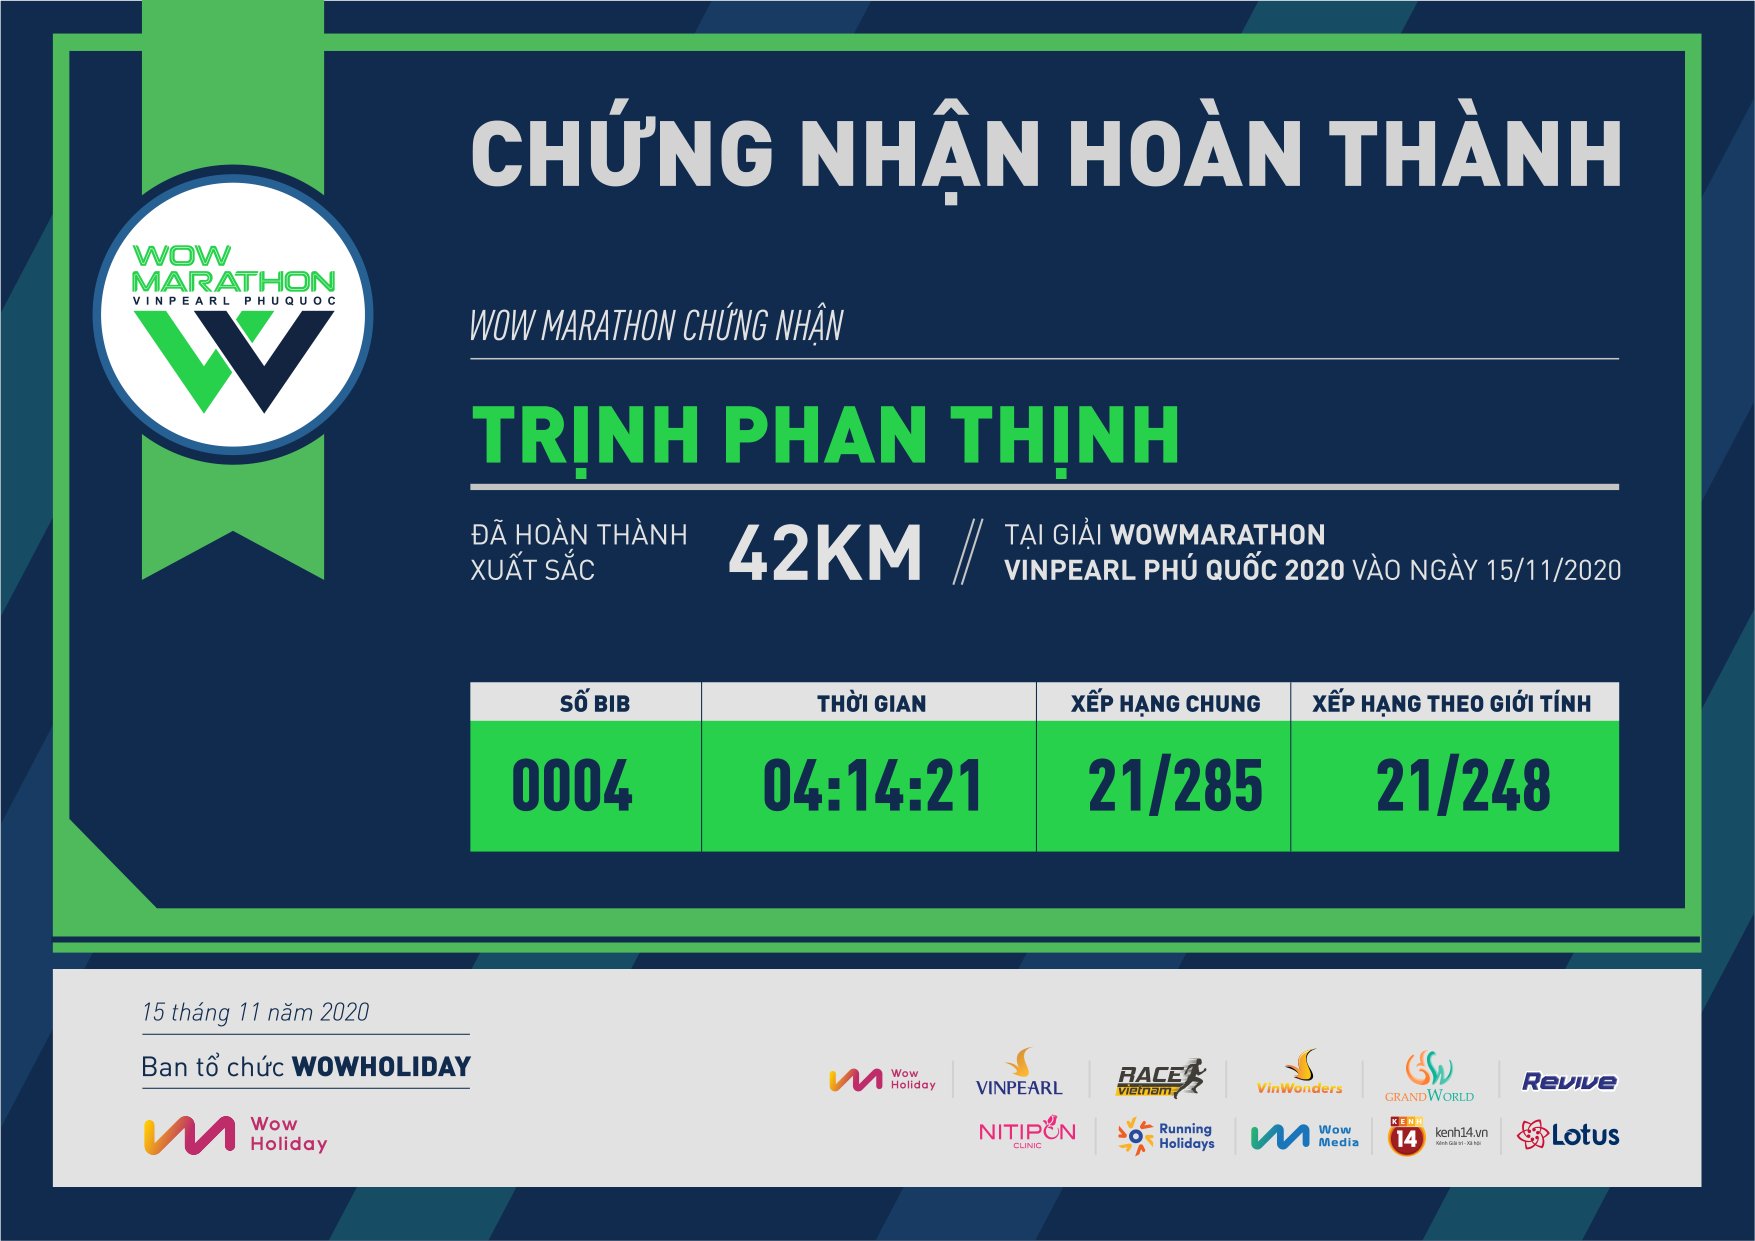 0004 - Trịnh Phan Thịnh